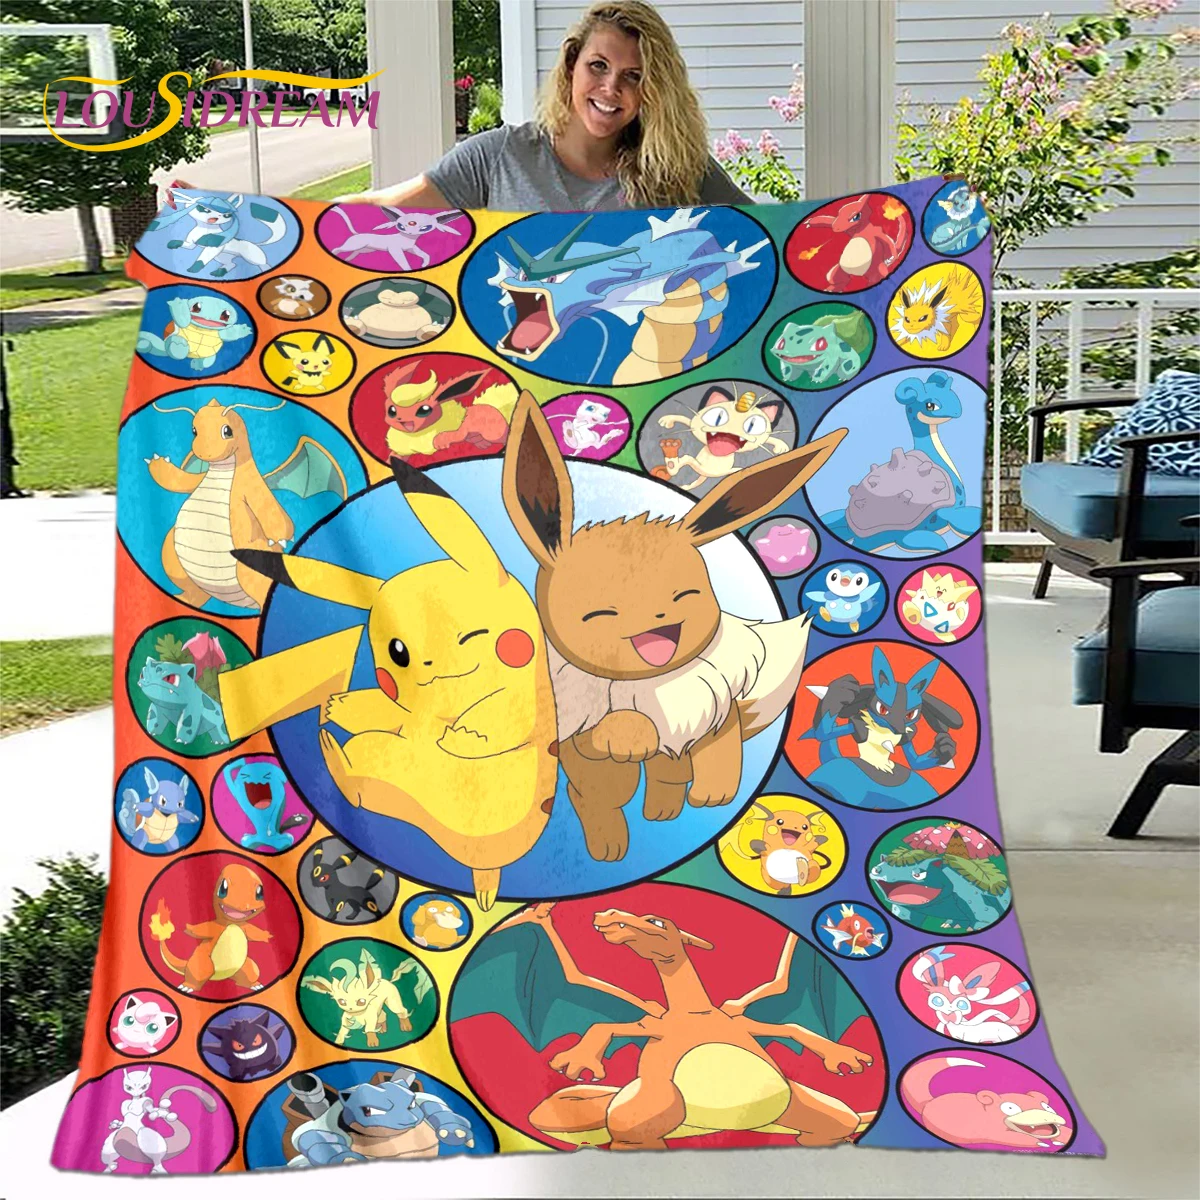 Cartoon Cute Pokemon Pikachu Blanket,Flannel Throw Blanket,Sherpa Warm Blanket Children's Blanket for Bedroom Beds Sofa Couch